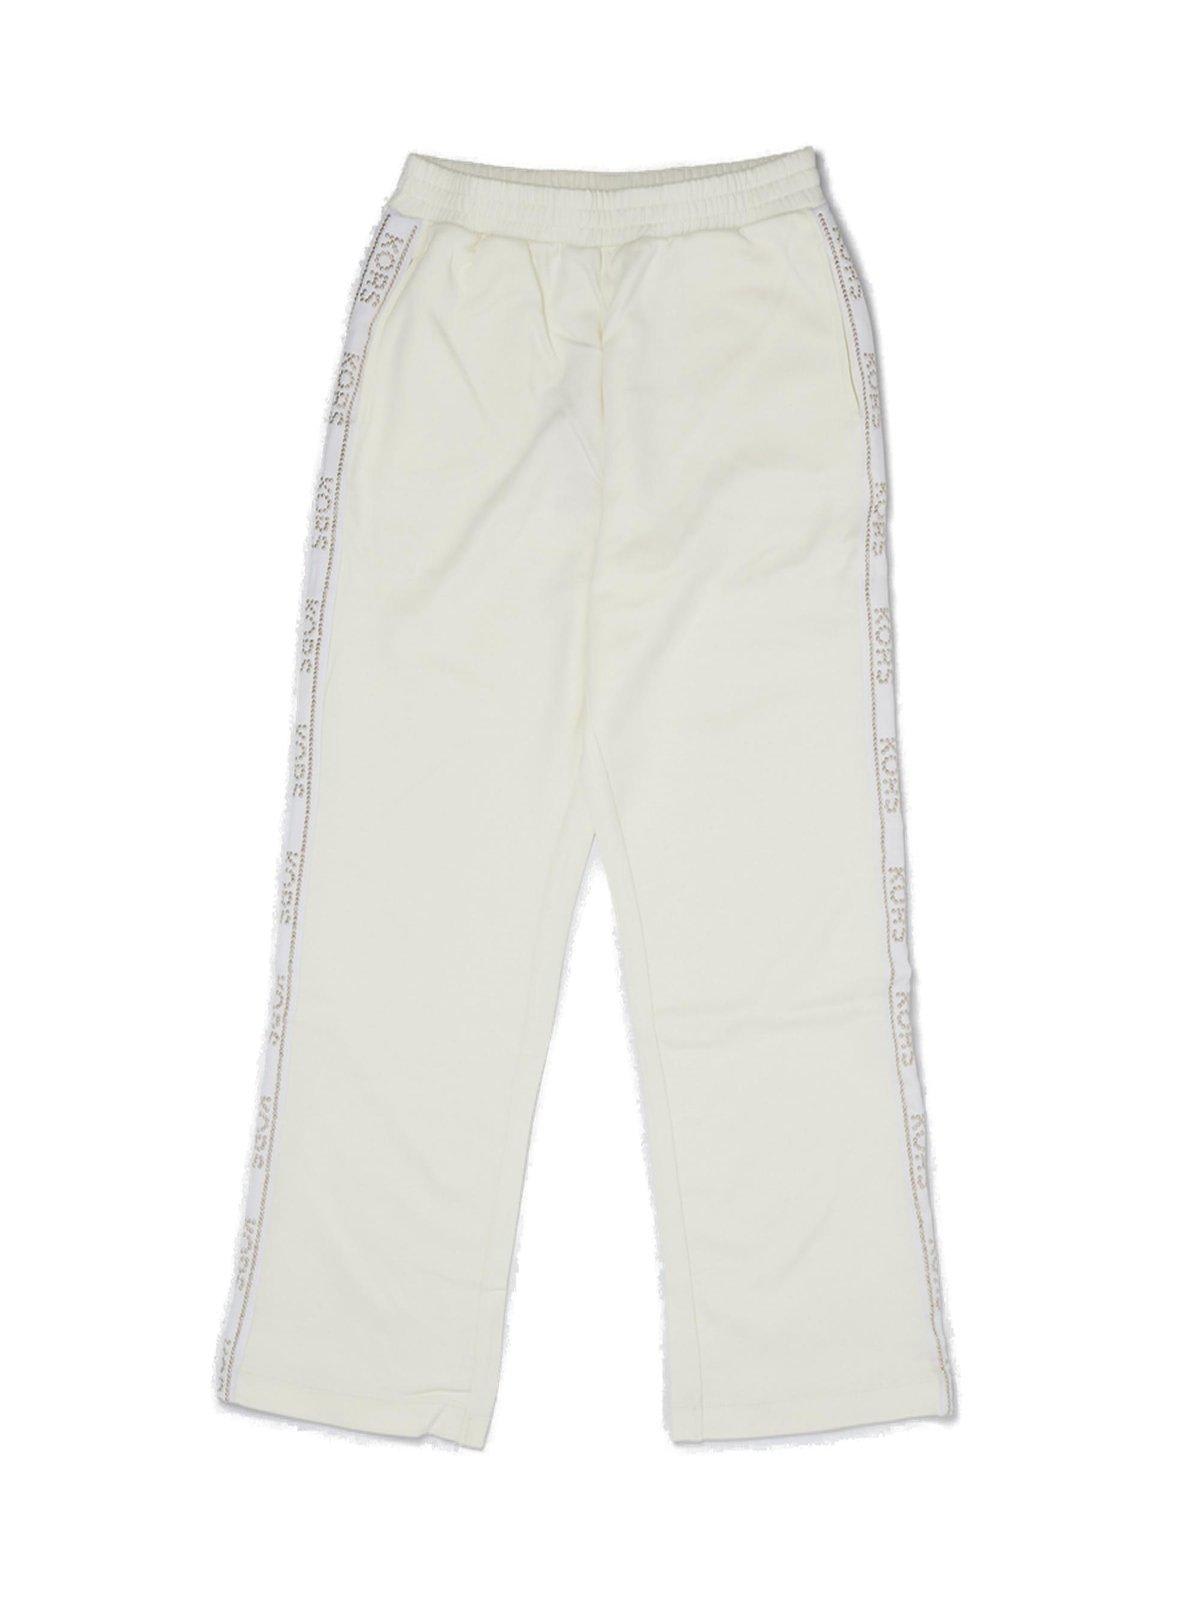 Michael Kors Stud Embellished Jogging Trousers